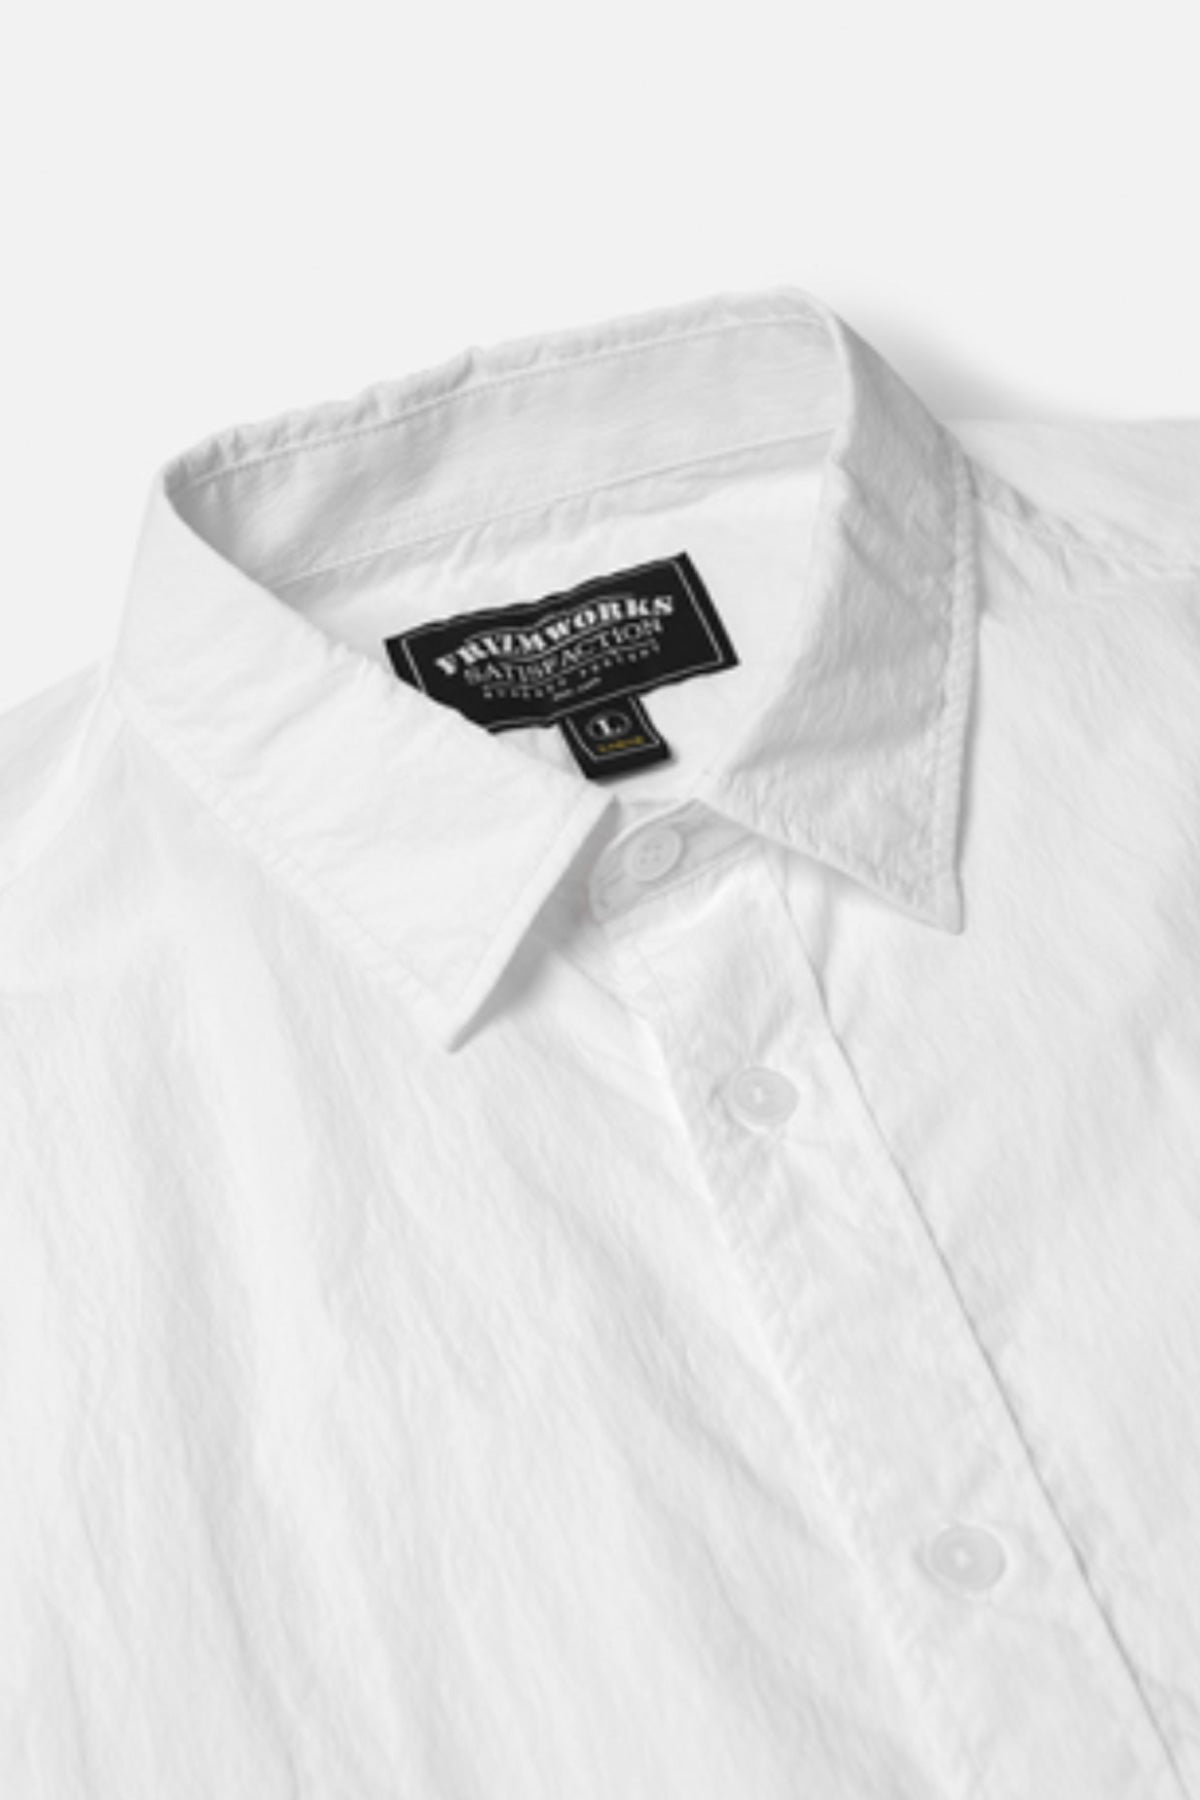 FrizmWORKS - Nyco String Half Shirt - White - Canoe Club